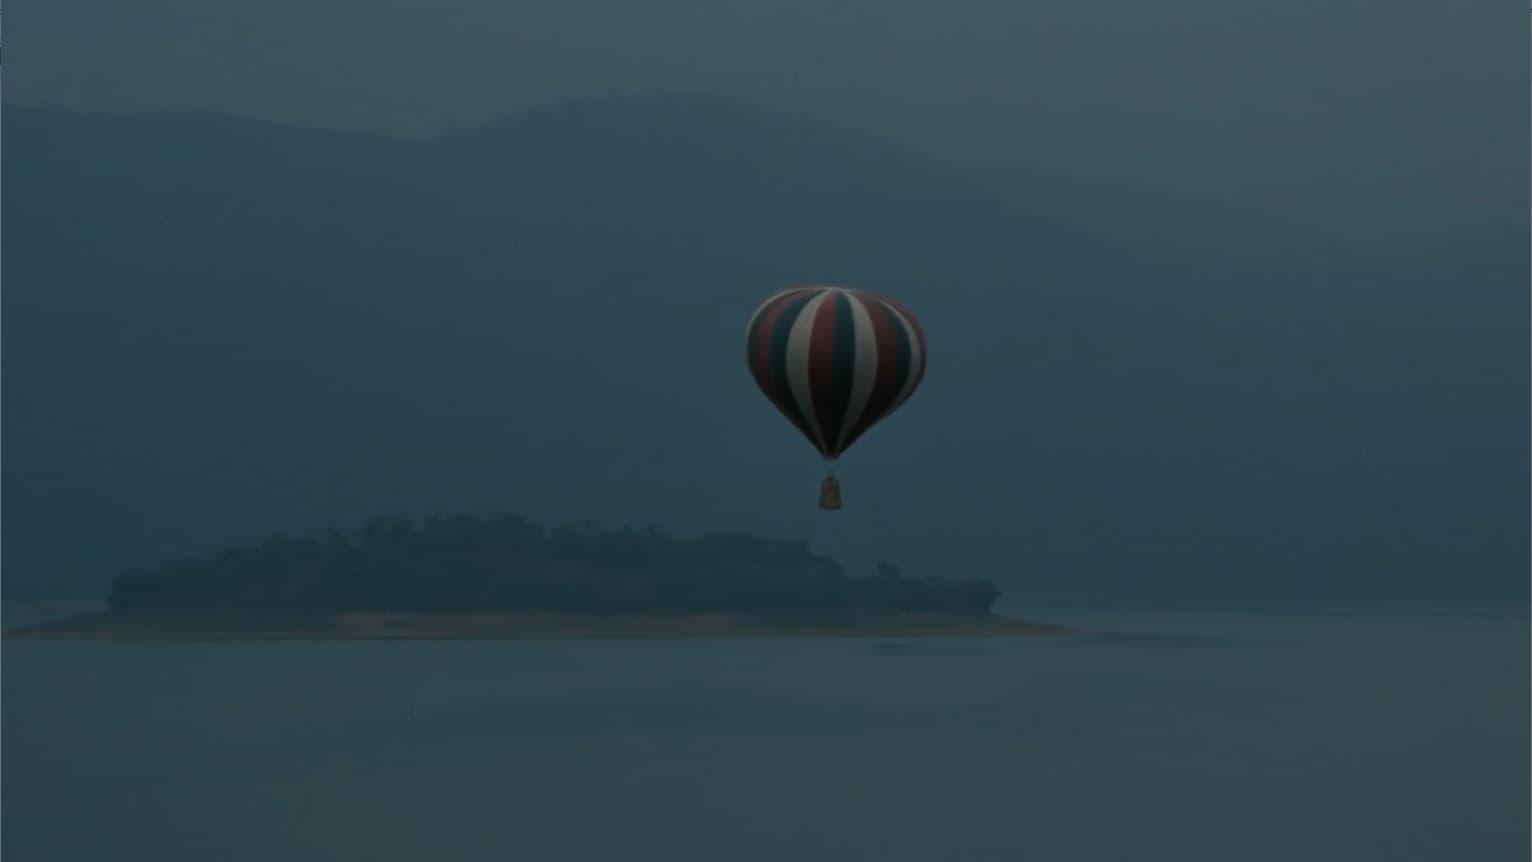 Fantastic Voyage in a Baloon backdrop